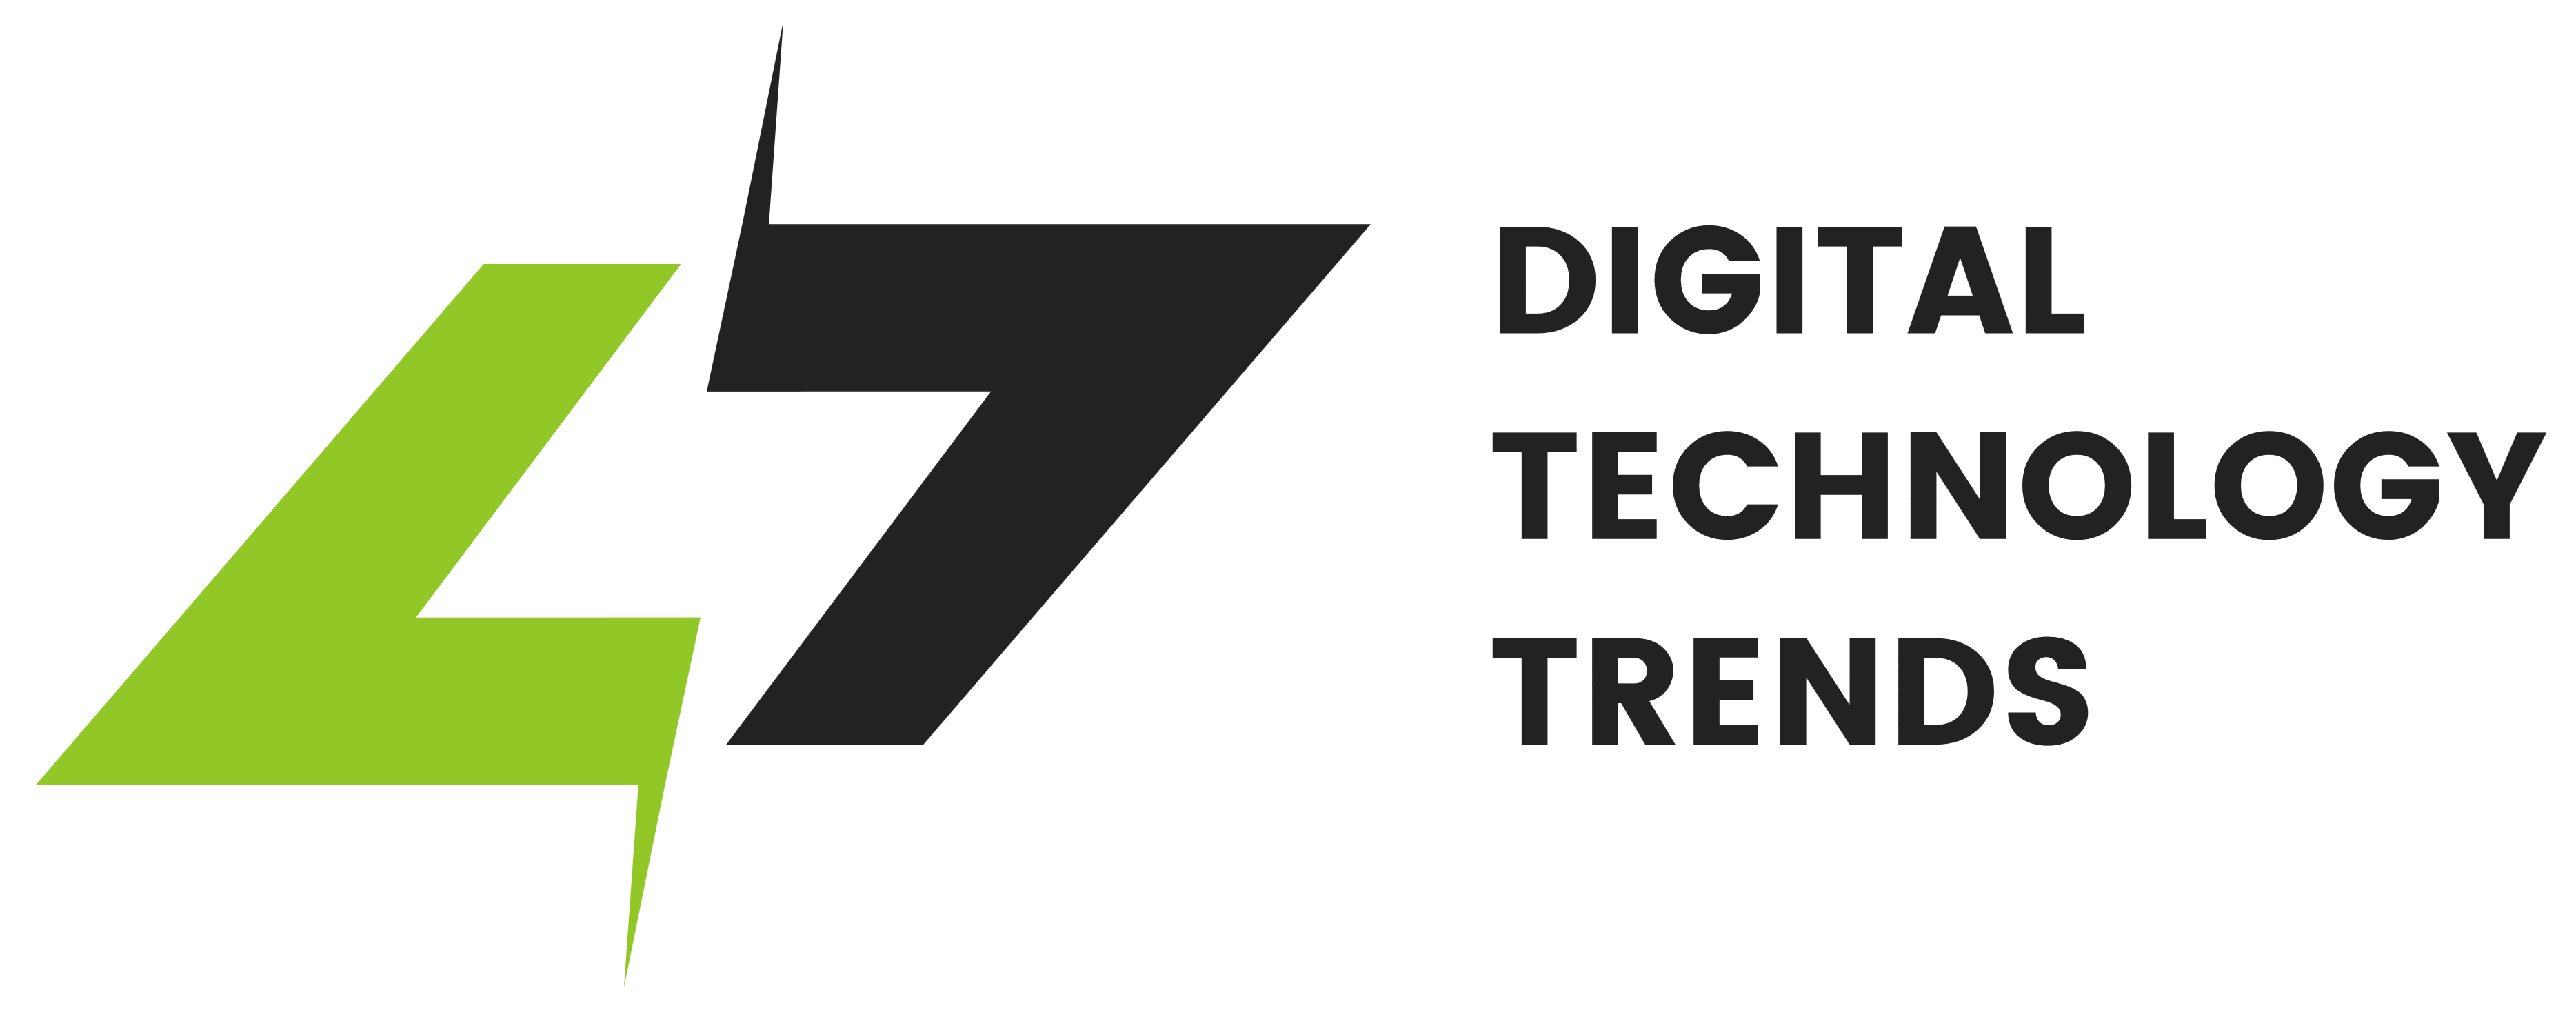 Digital Technology Trends